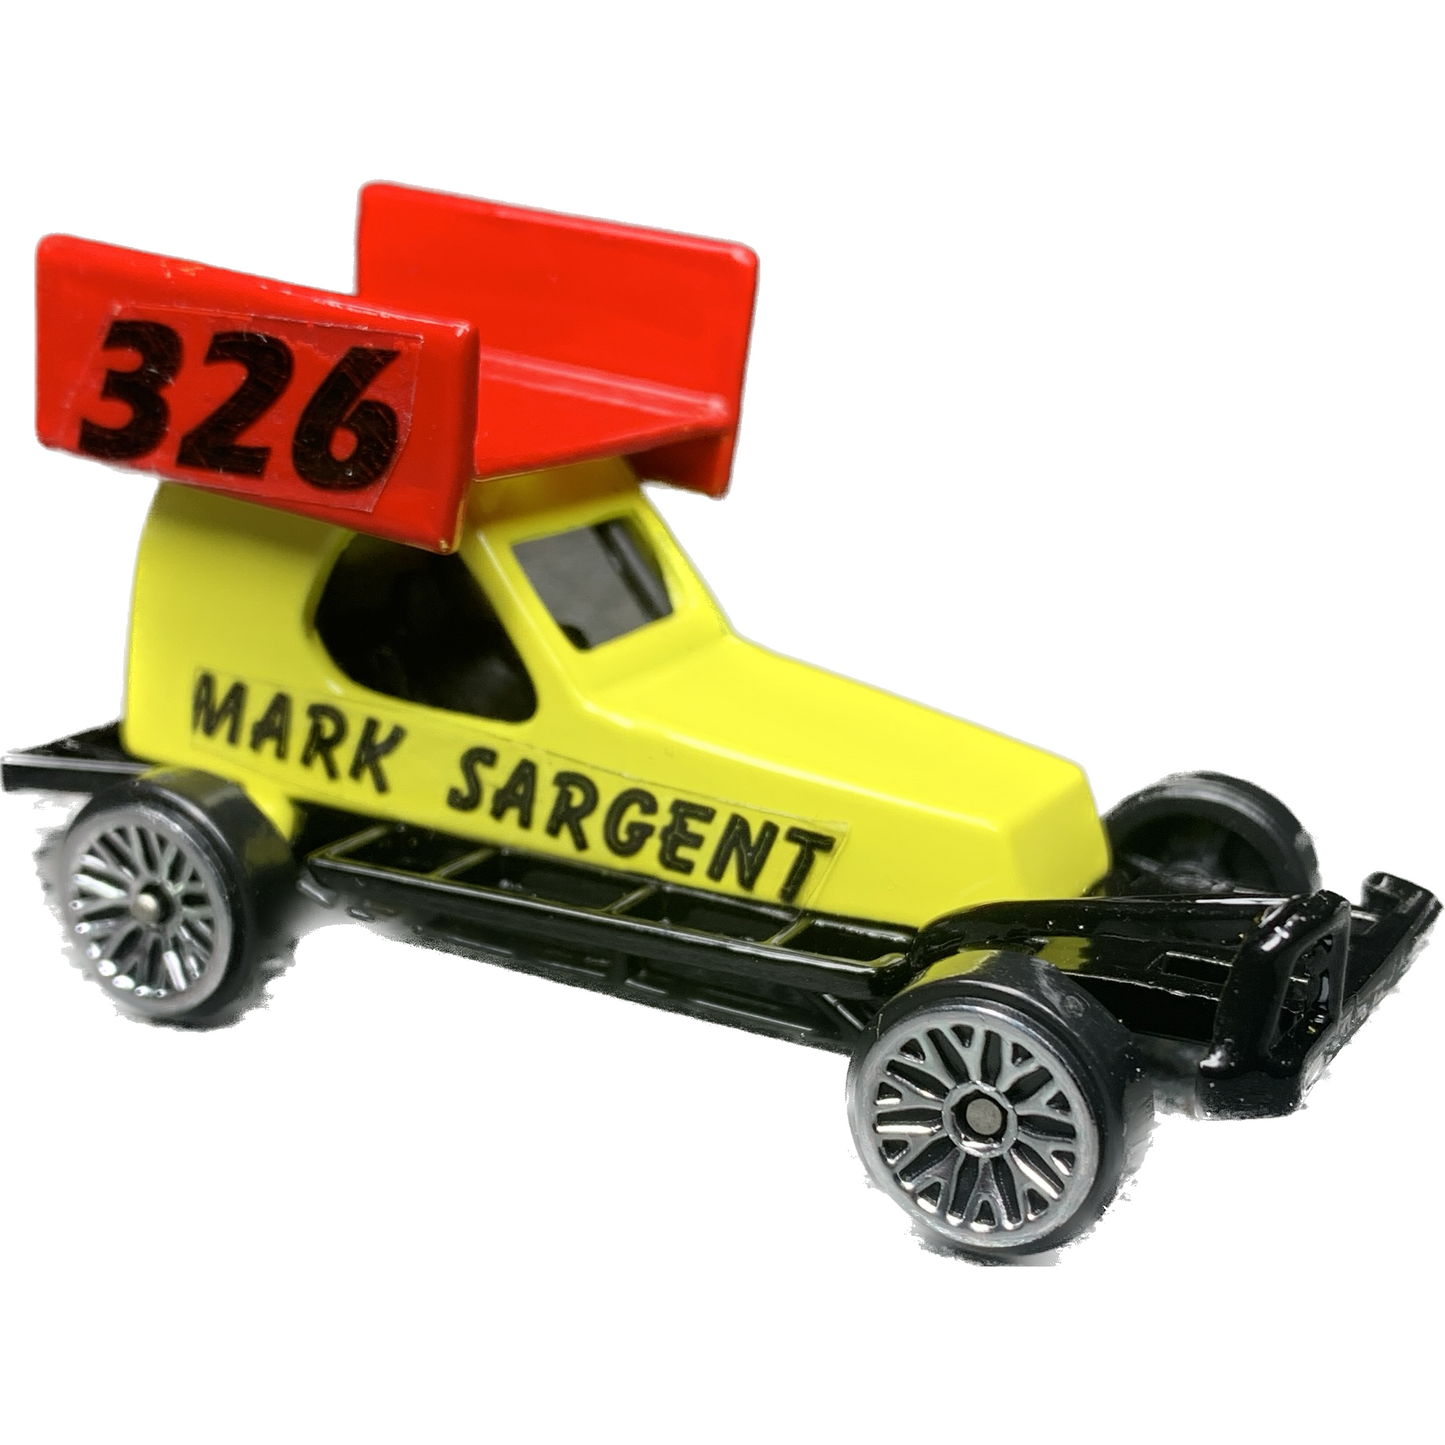 #326 Mark Sargent